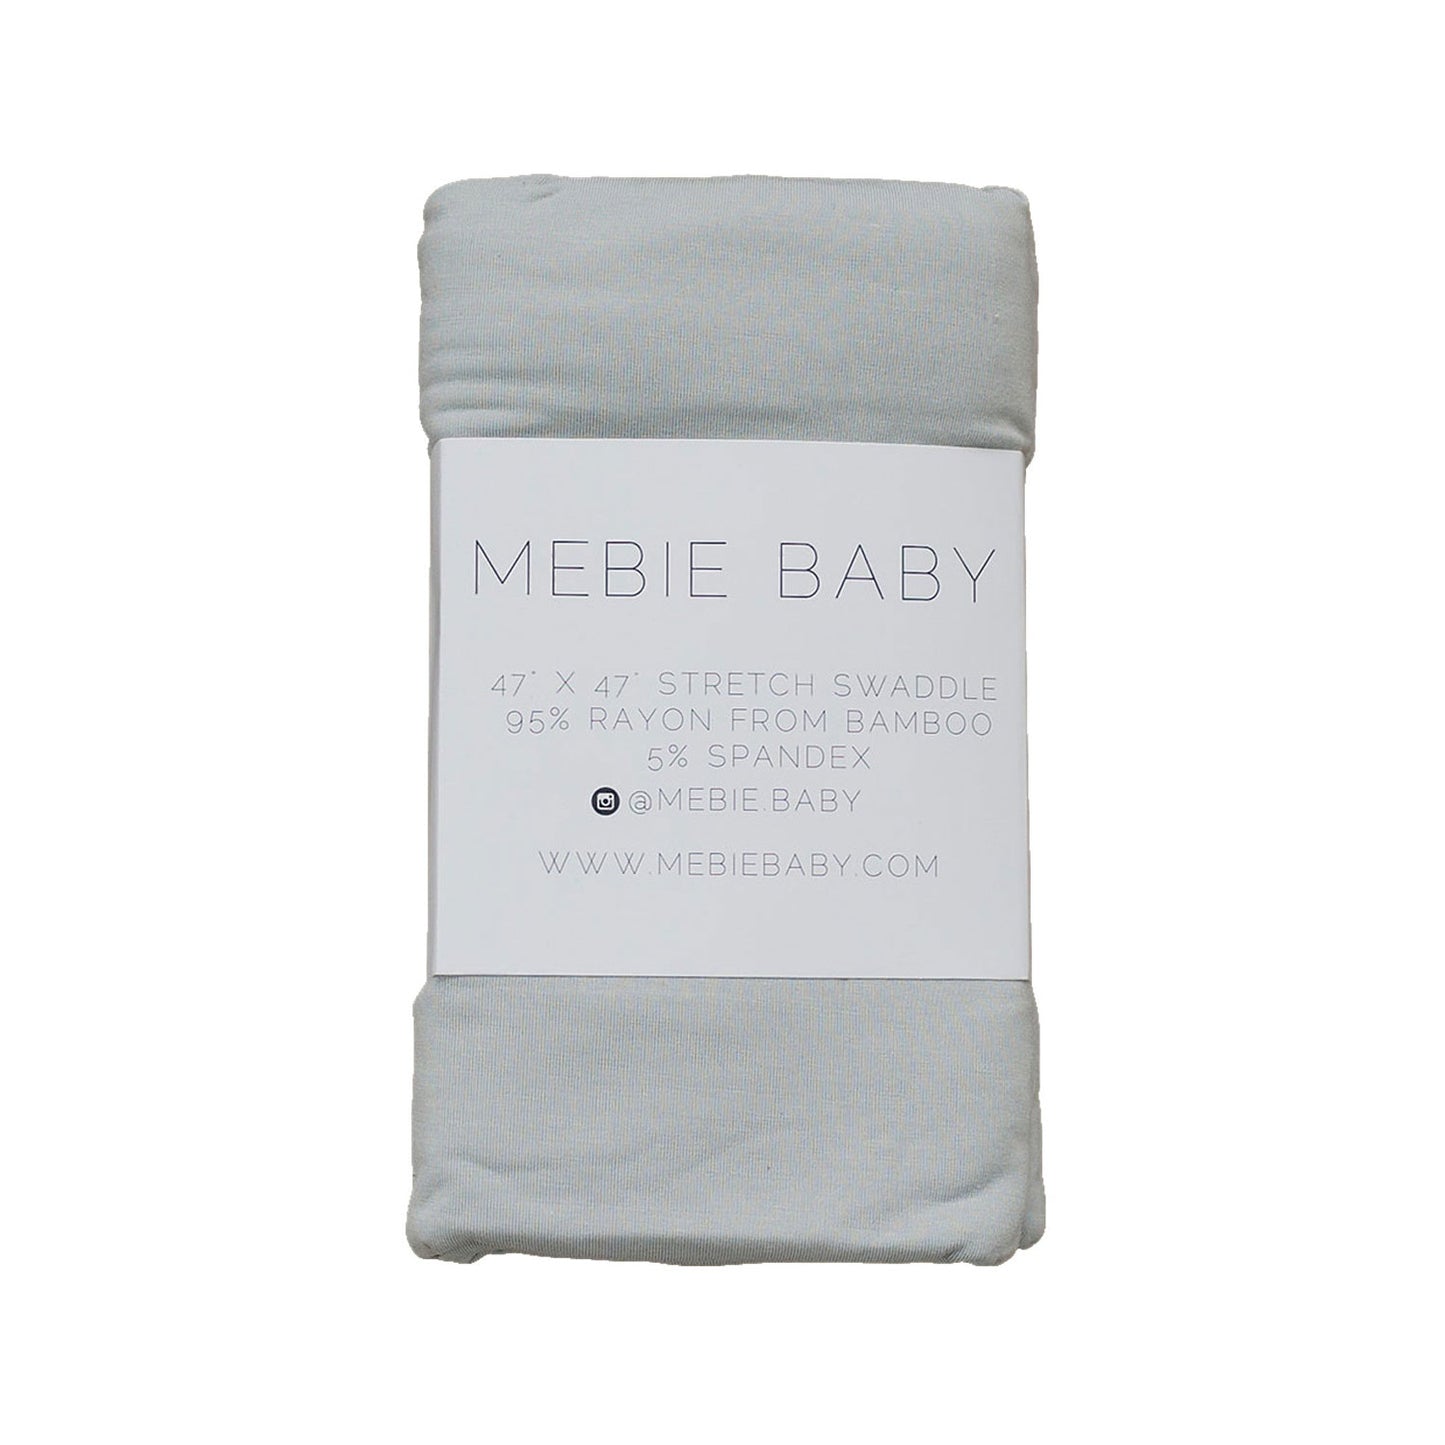 Mebie Baby Bamboo Stretch Swaddle Blanket - Stone Grey